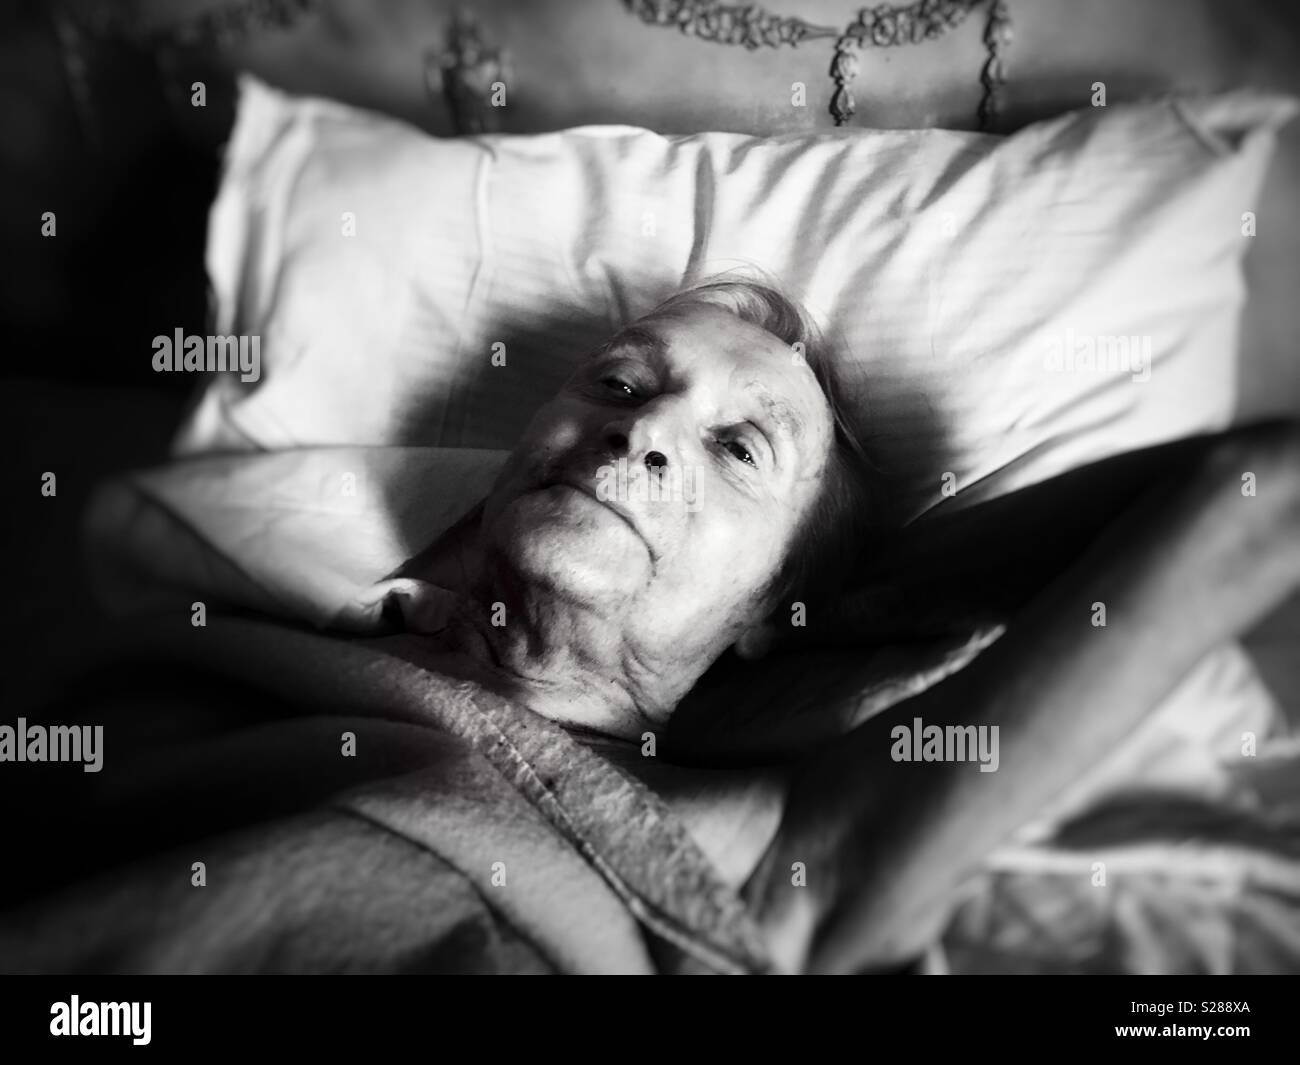 94-year old man who can’t sleep, Suffolk, England (summer 2018) Stock Photo